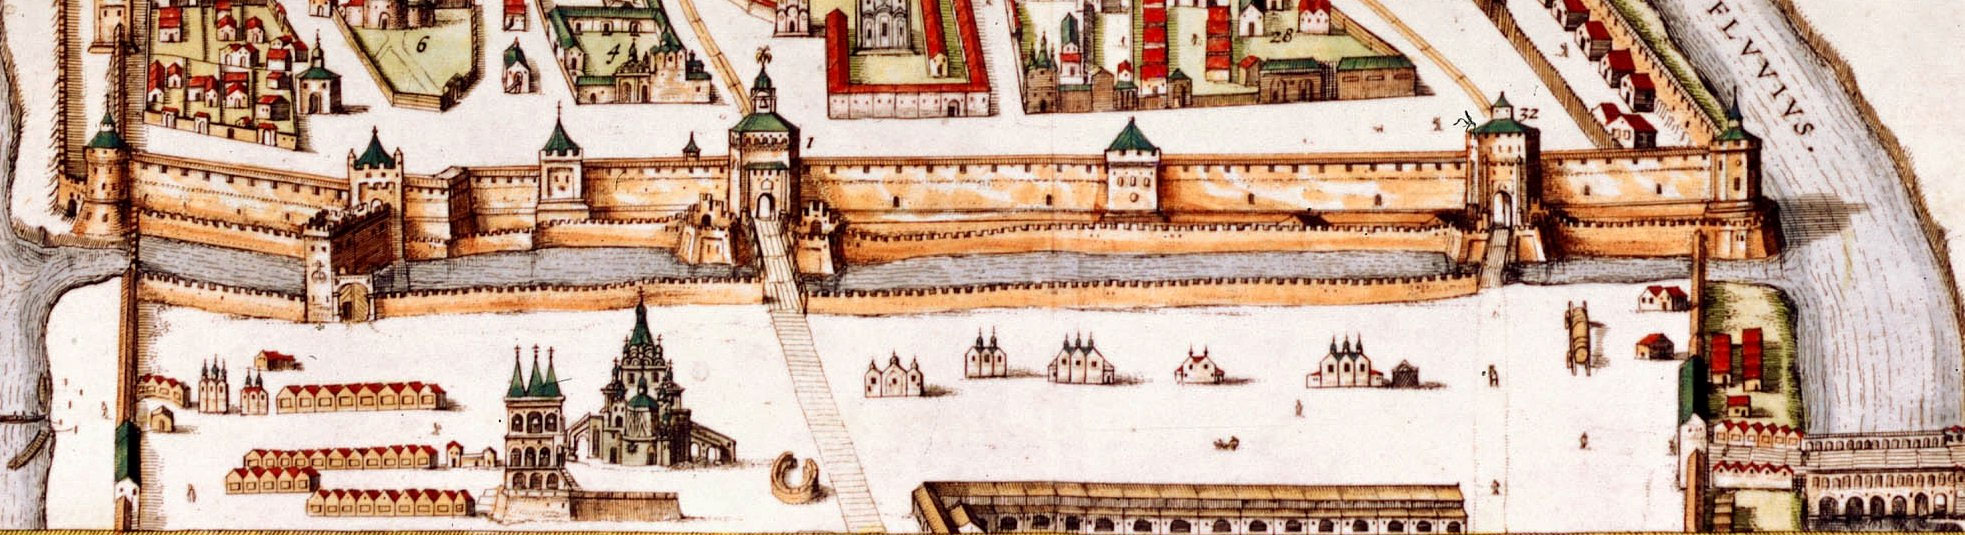 Восточная стена в начале XVII века